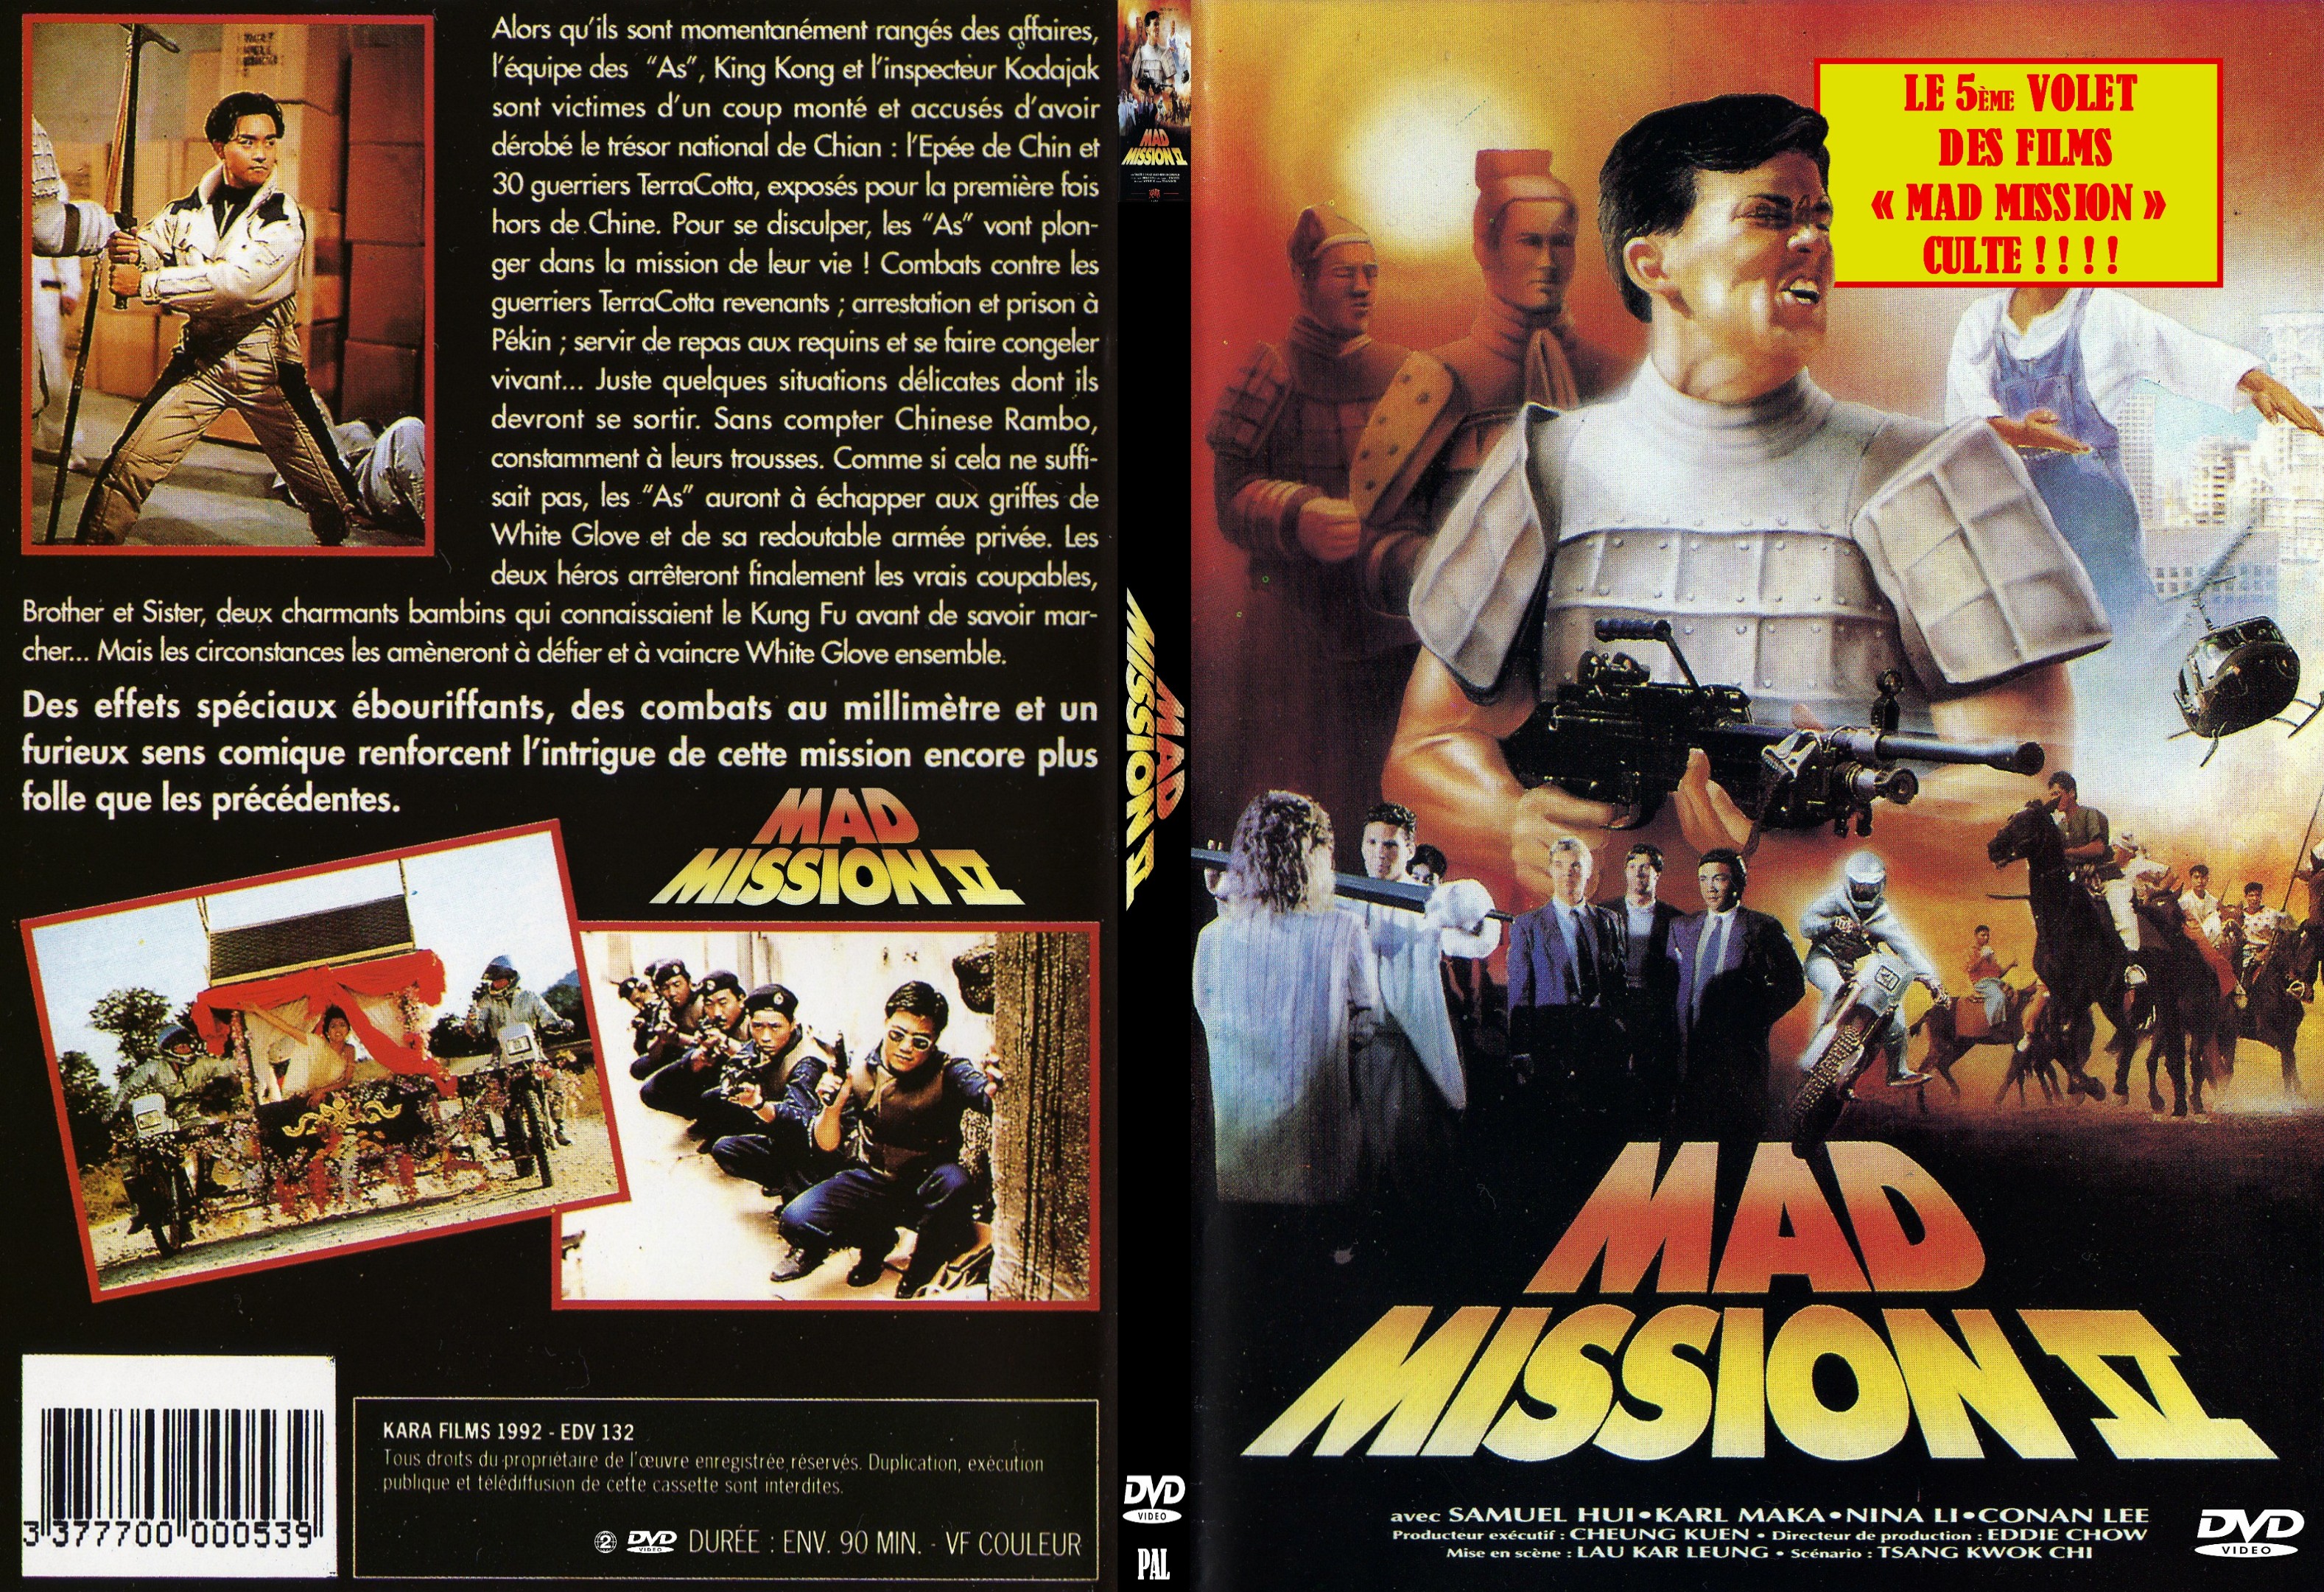 Jaquette DVD Mad mission 5 custom - SLIM